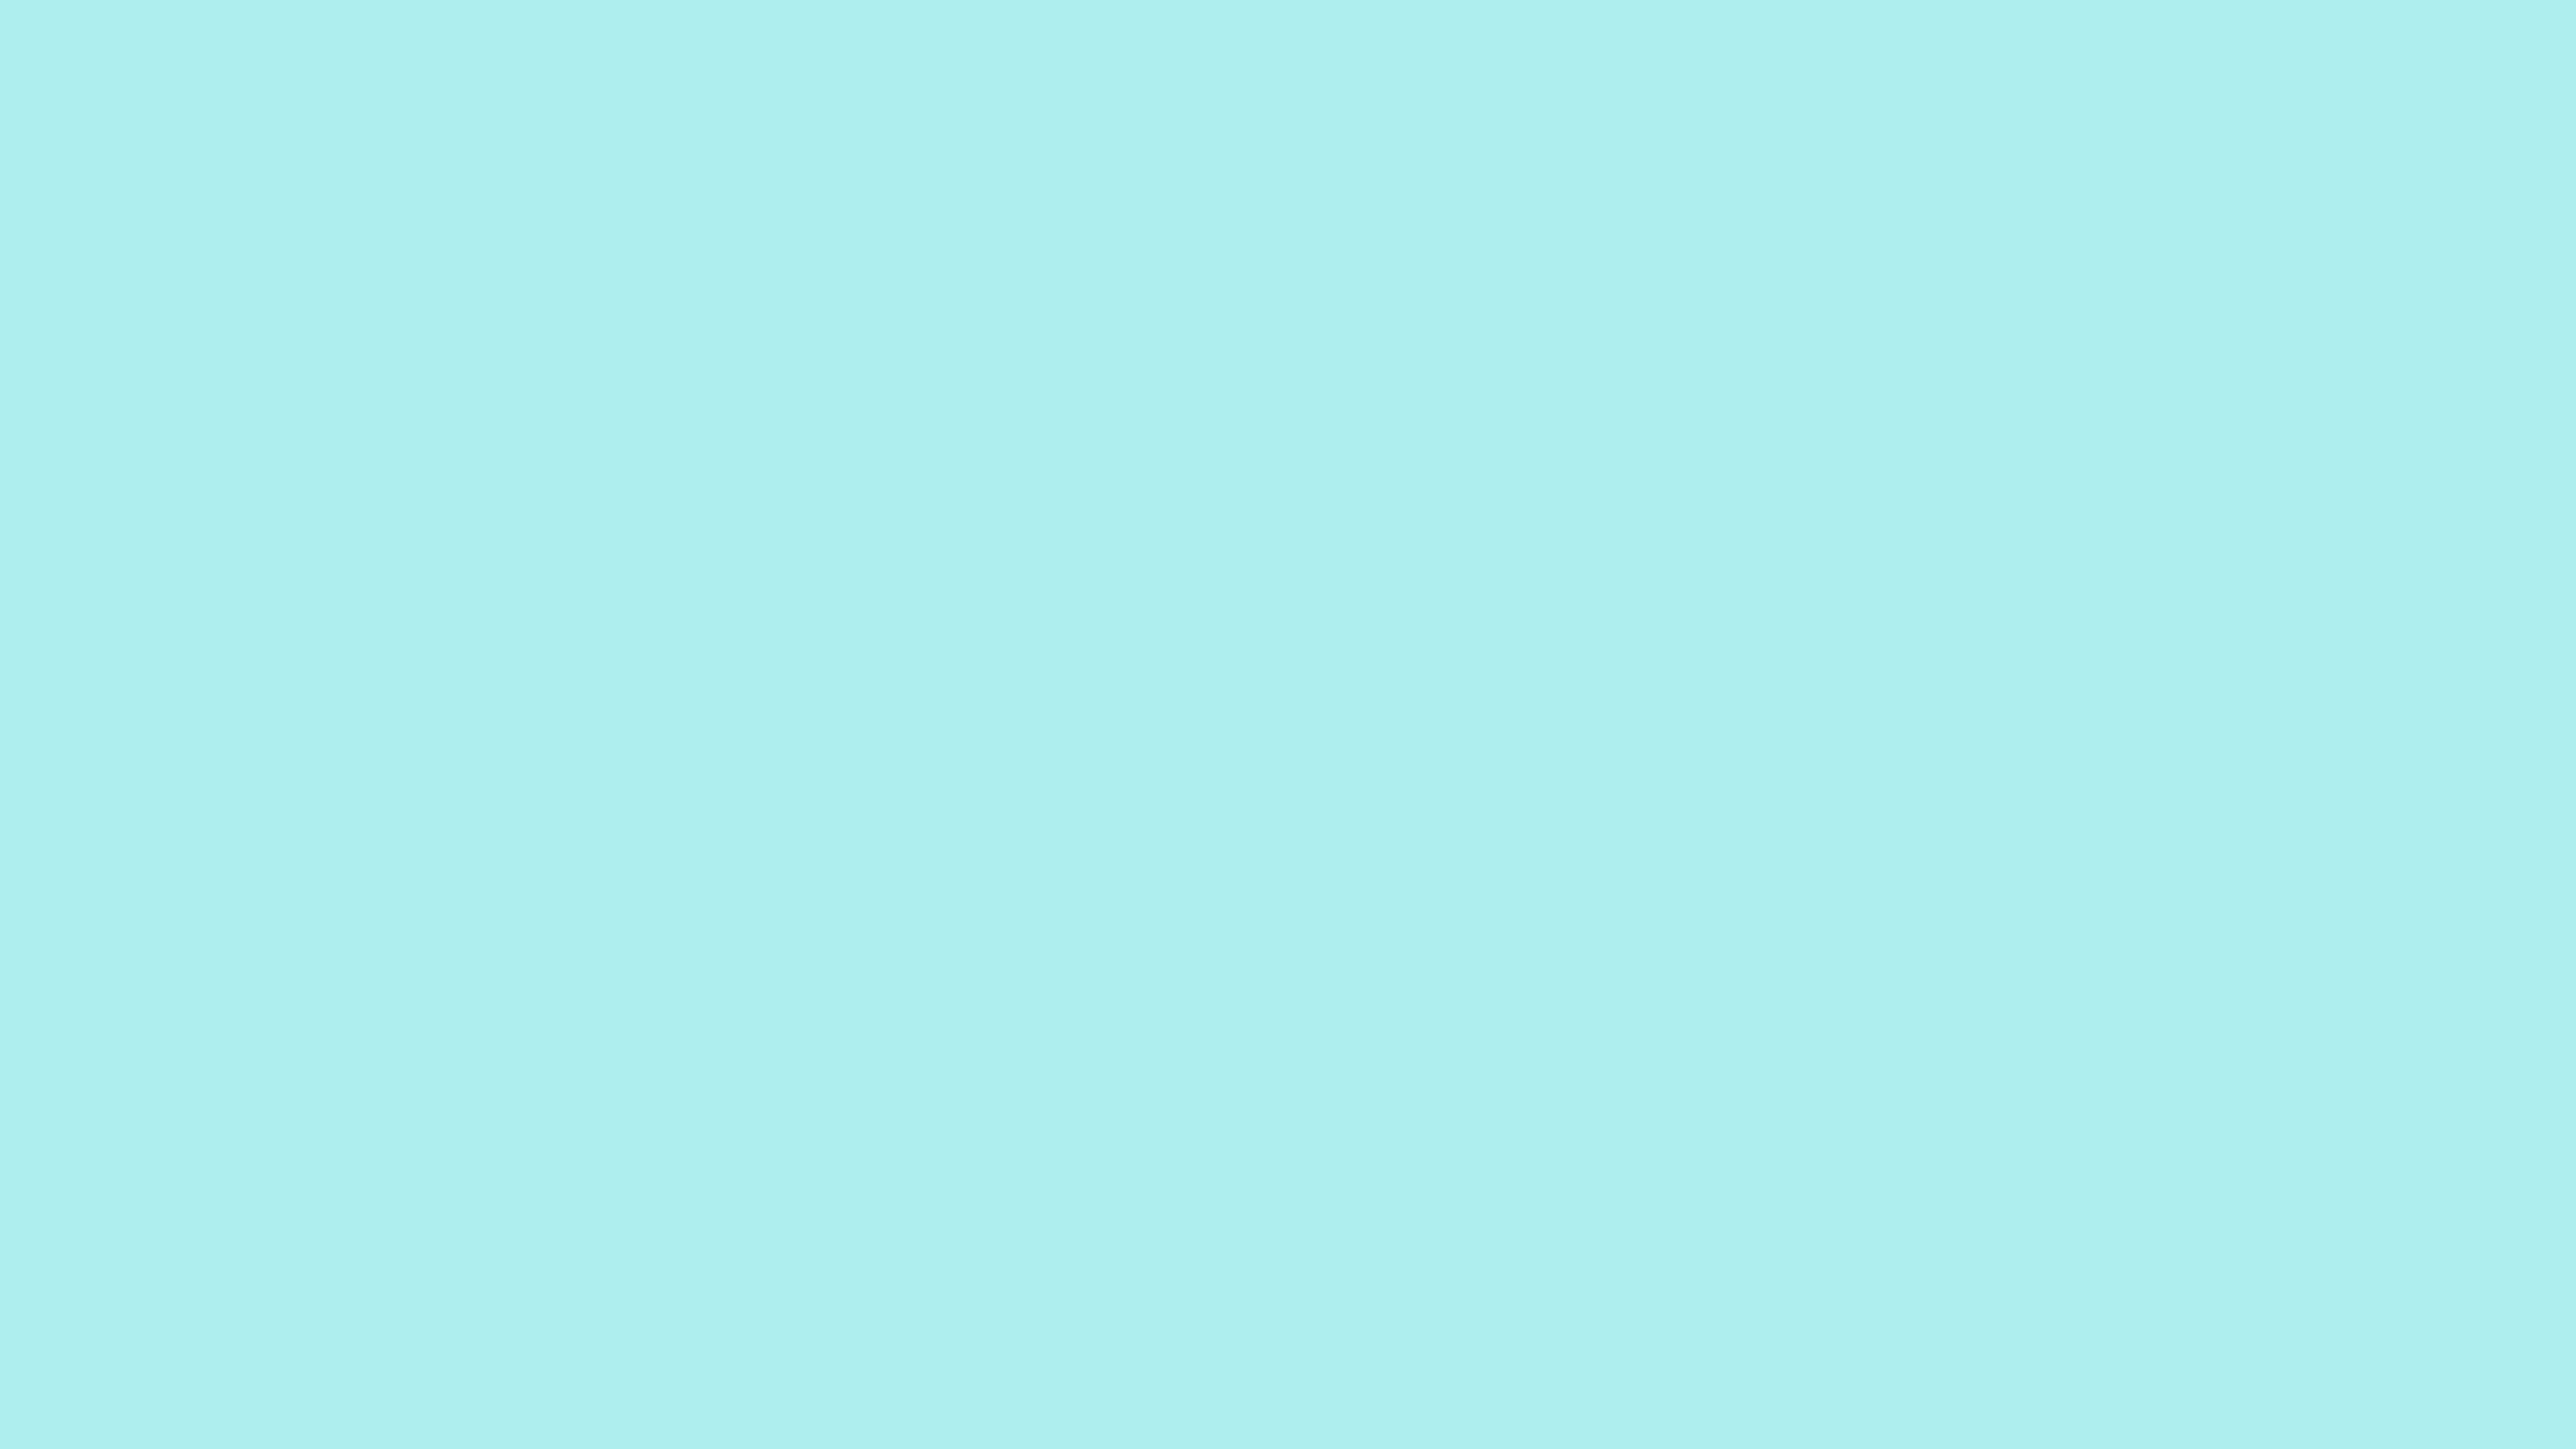 7680x4320 Pale Blue Solid Color Background